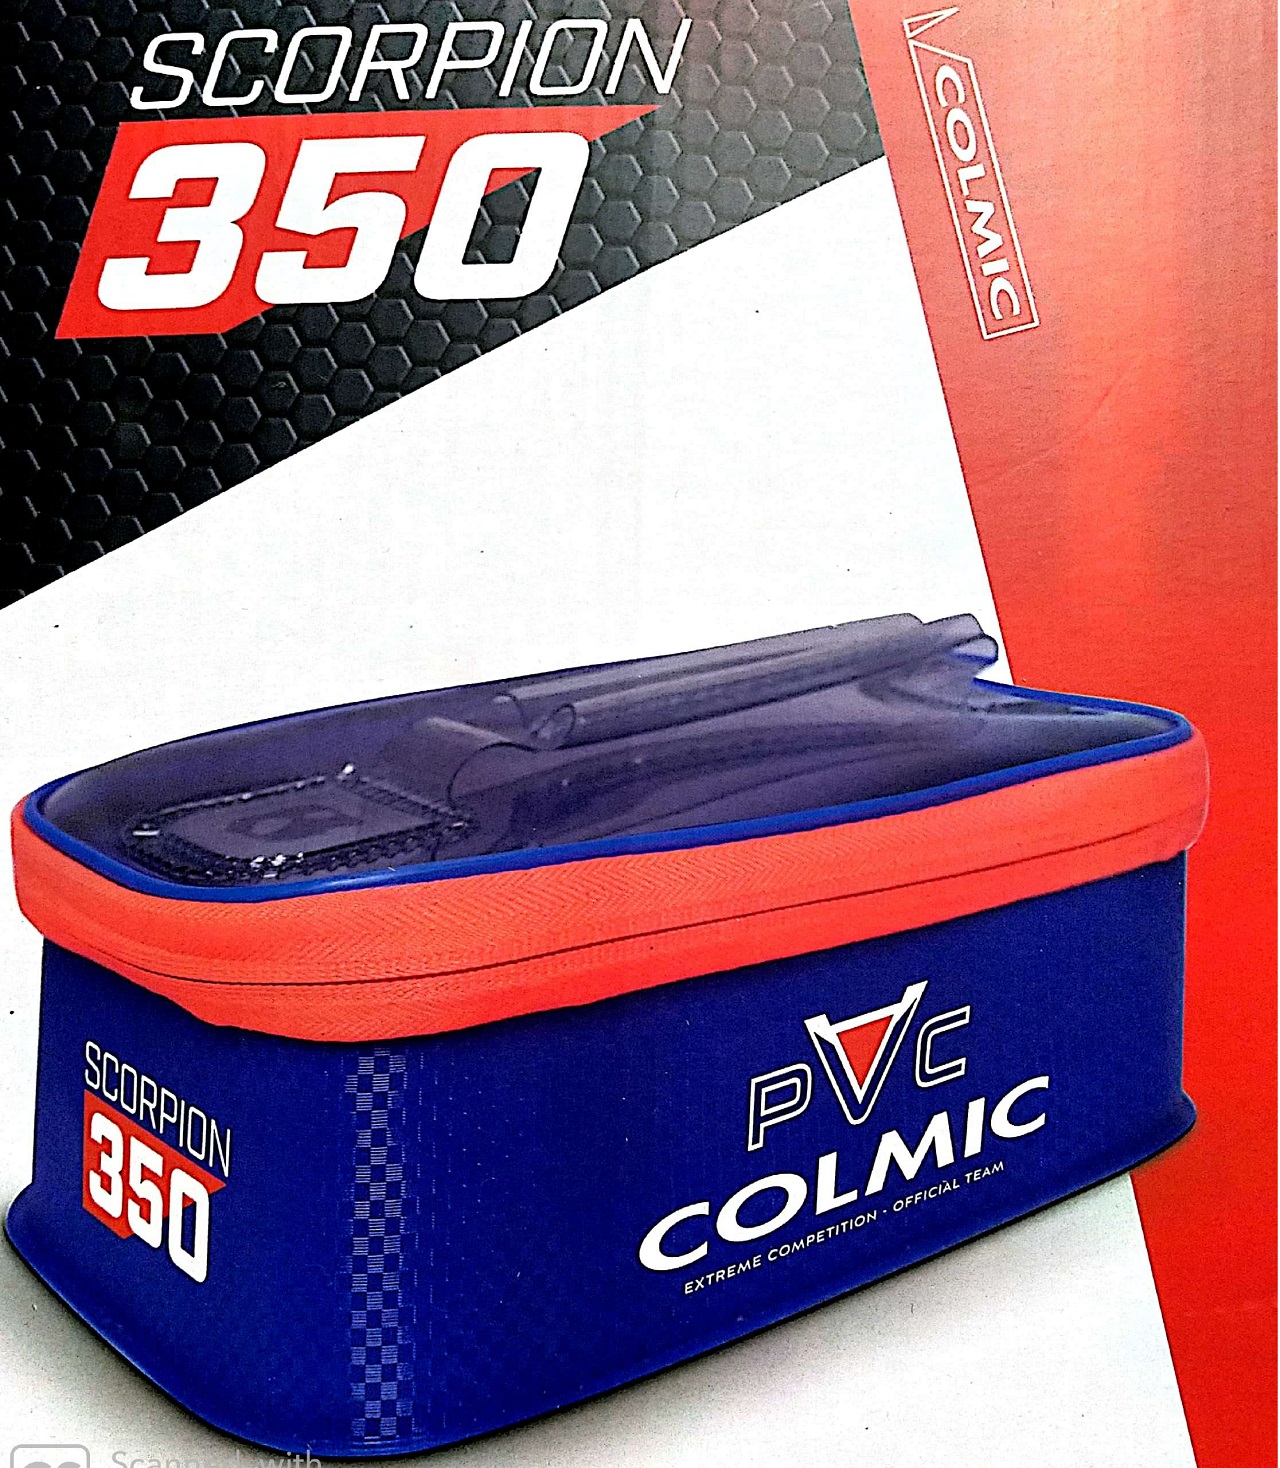 colmic PVC: SCORPION BOXEVA401_1.jpg